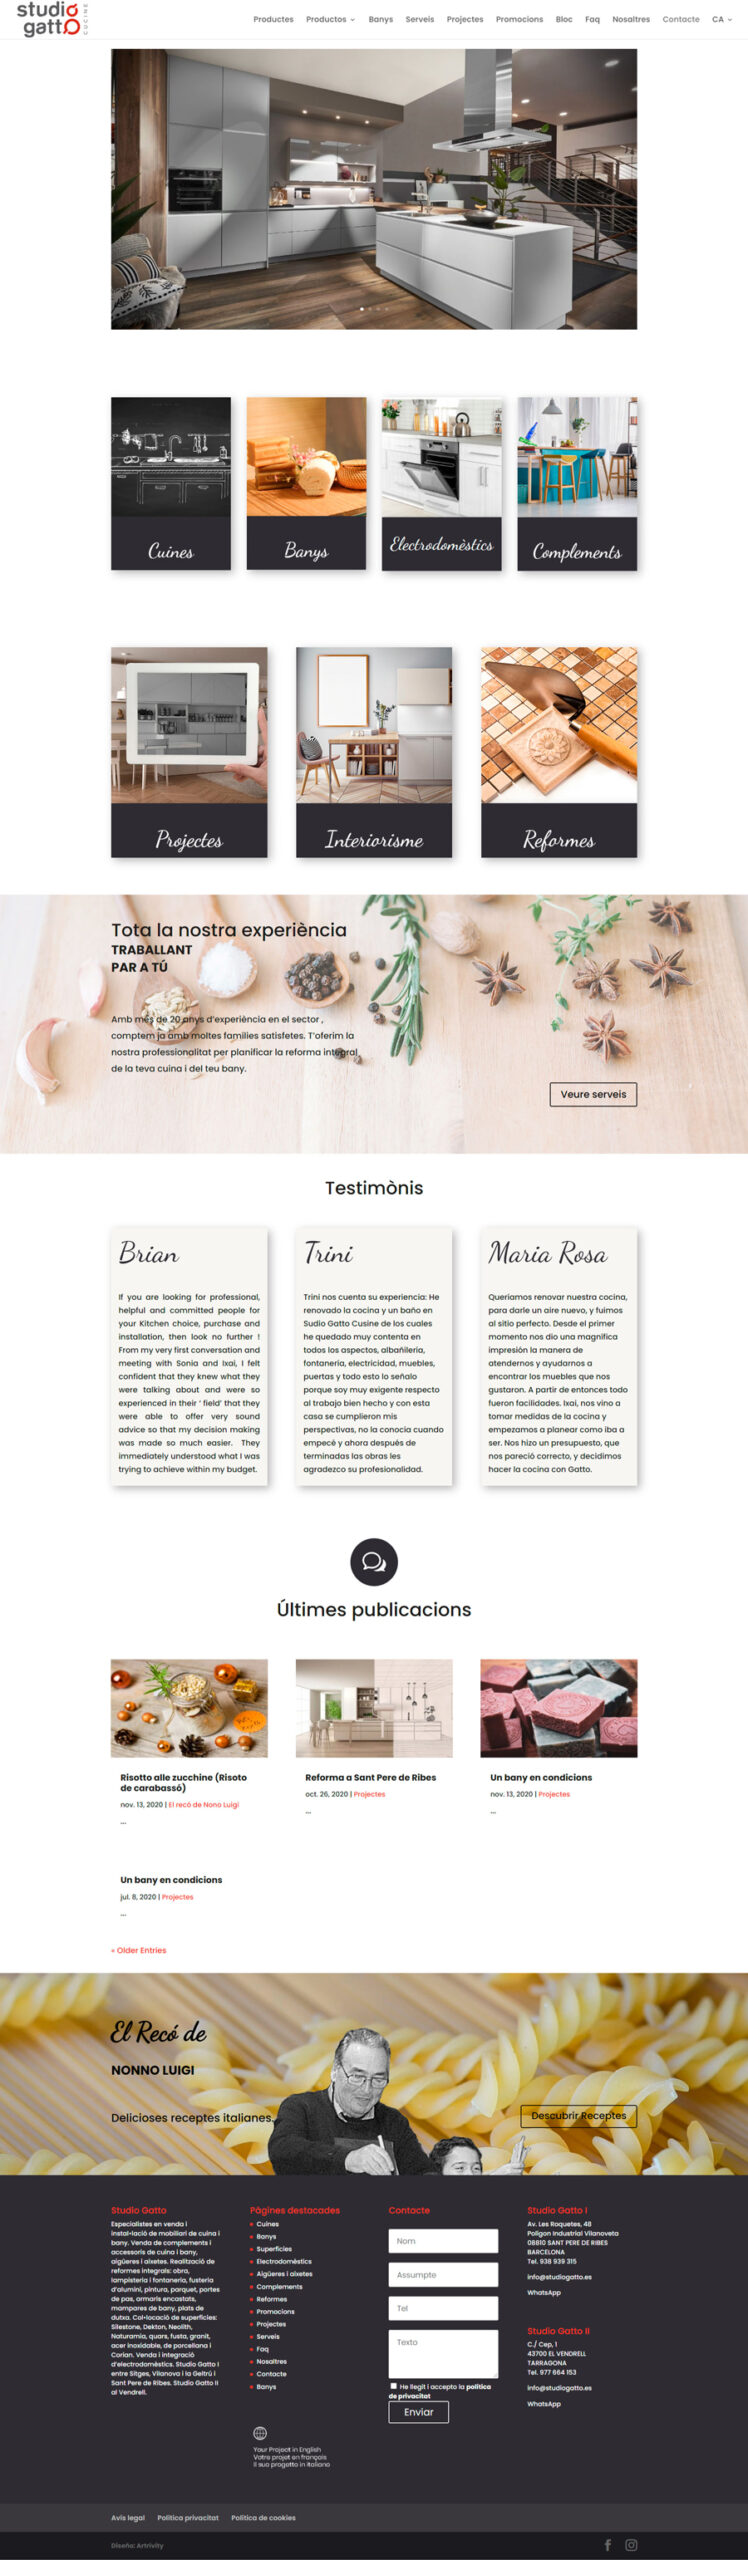 Diseño web Sant Pere de Ribes